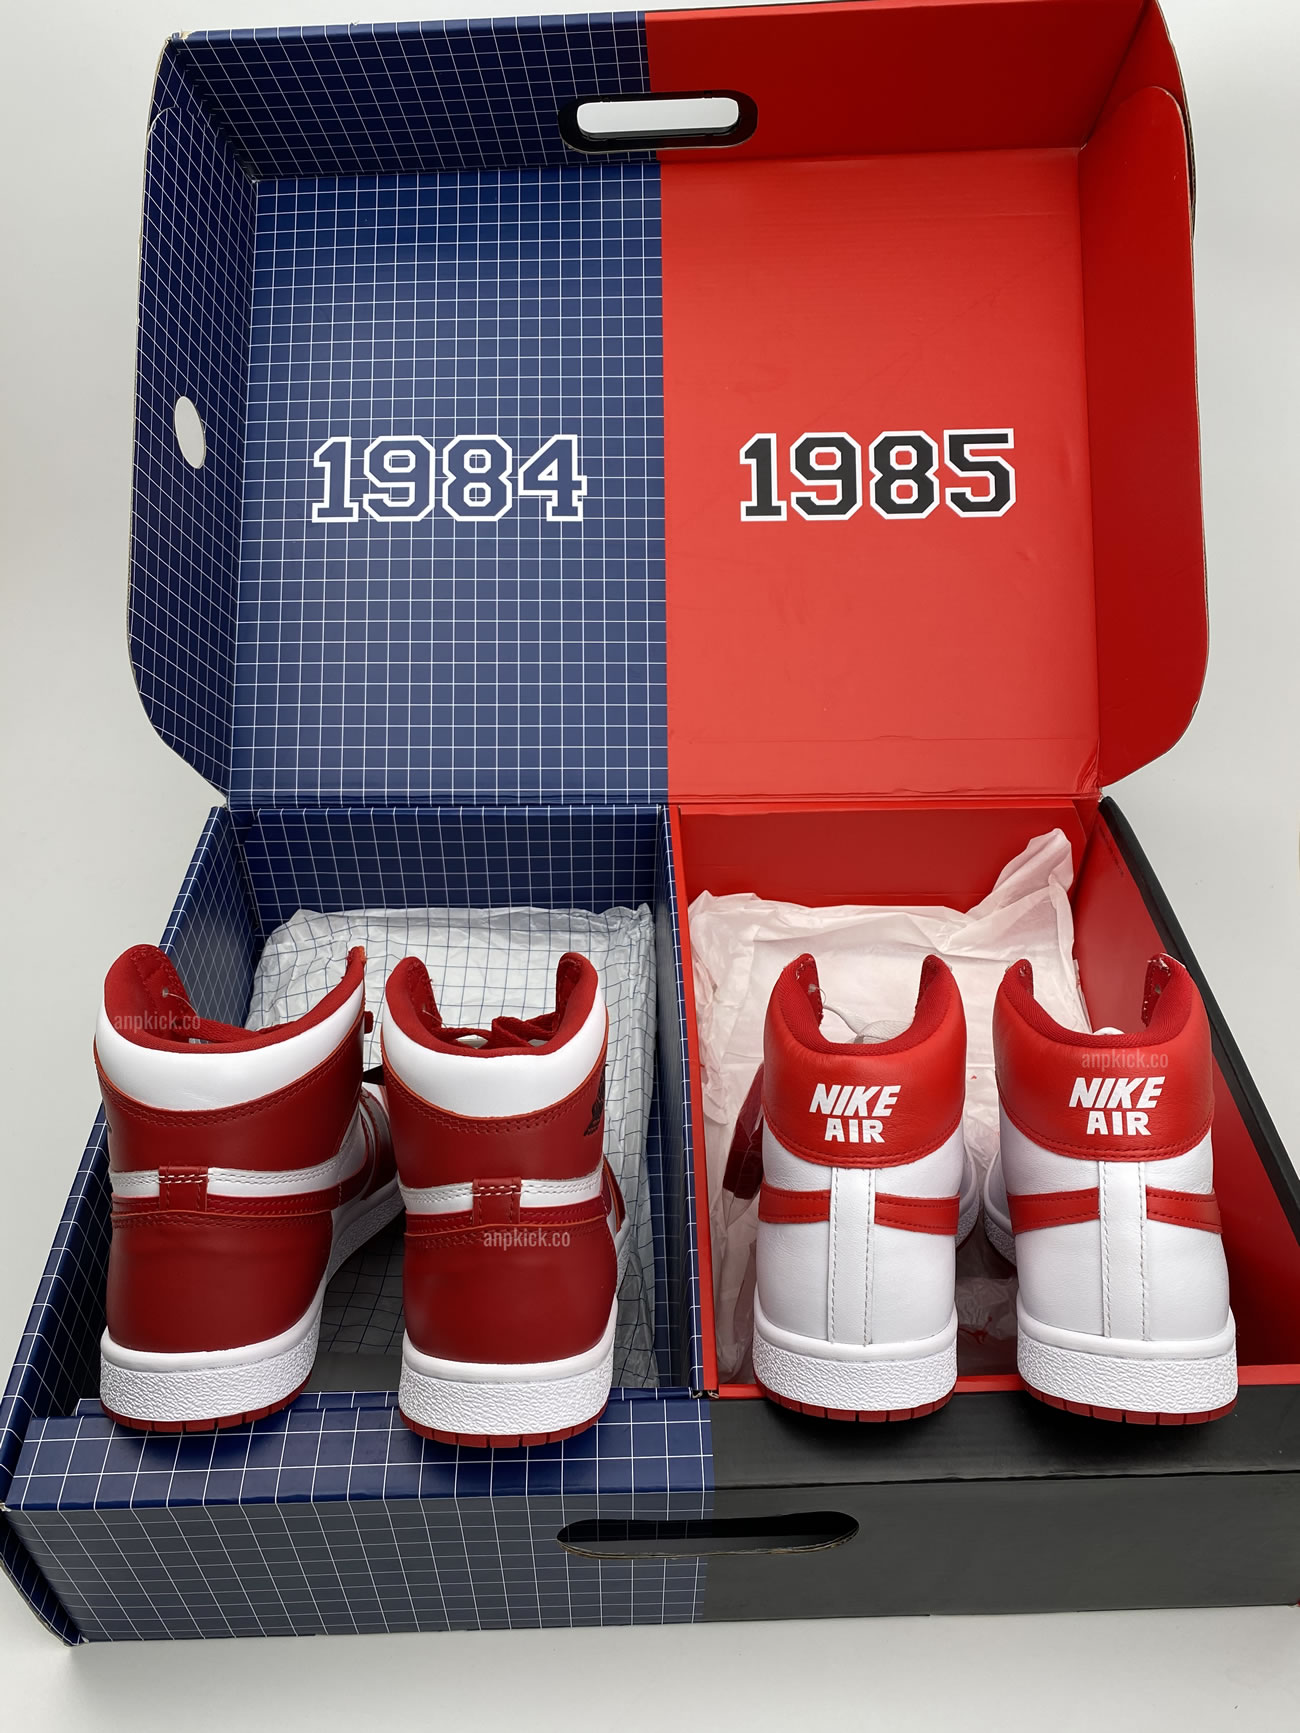 Nike Air Jordan 1 1984 And 1985 New Beginnings Pack Ct6252 900 (4) - newkick.org